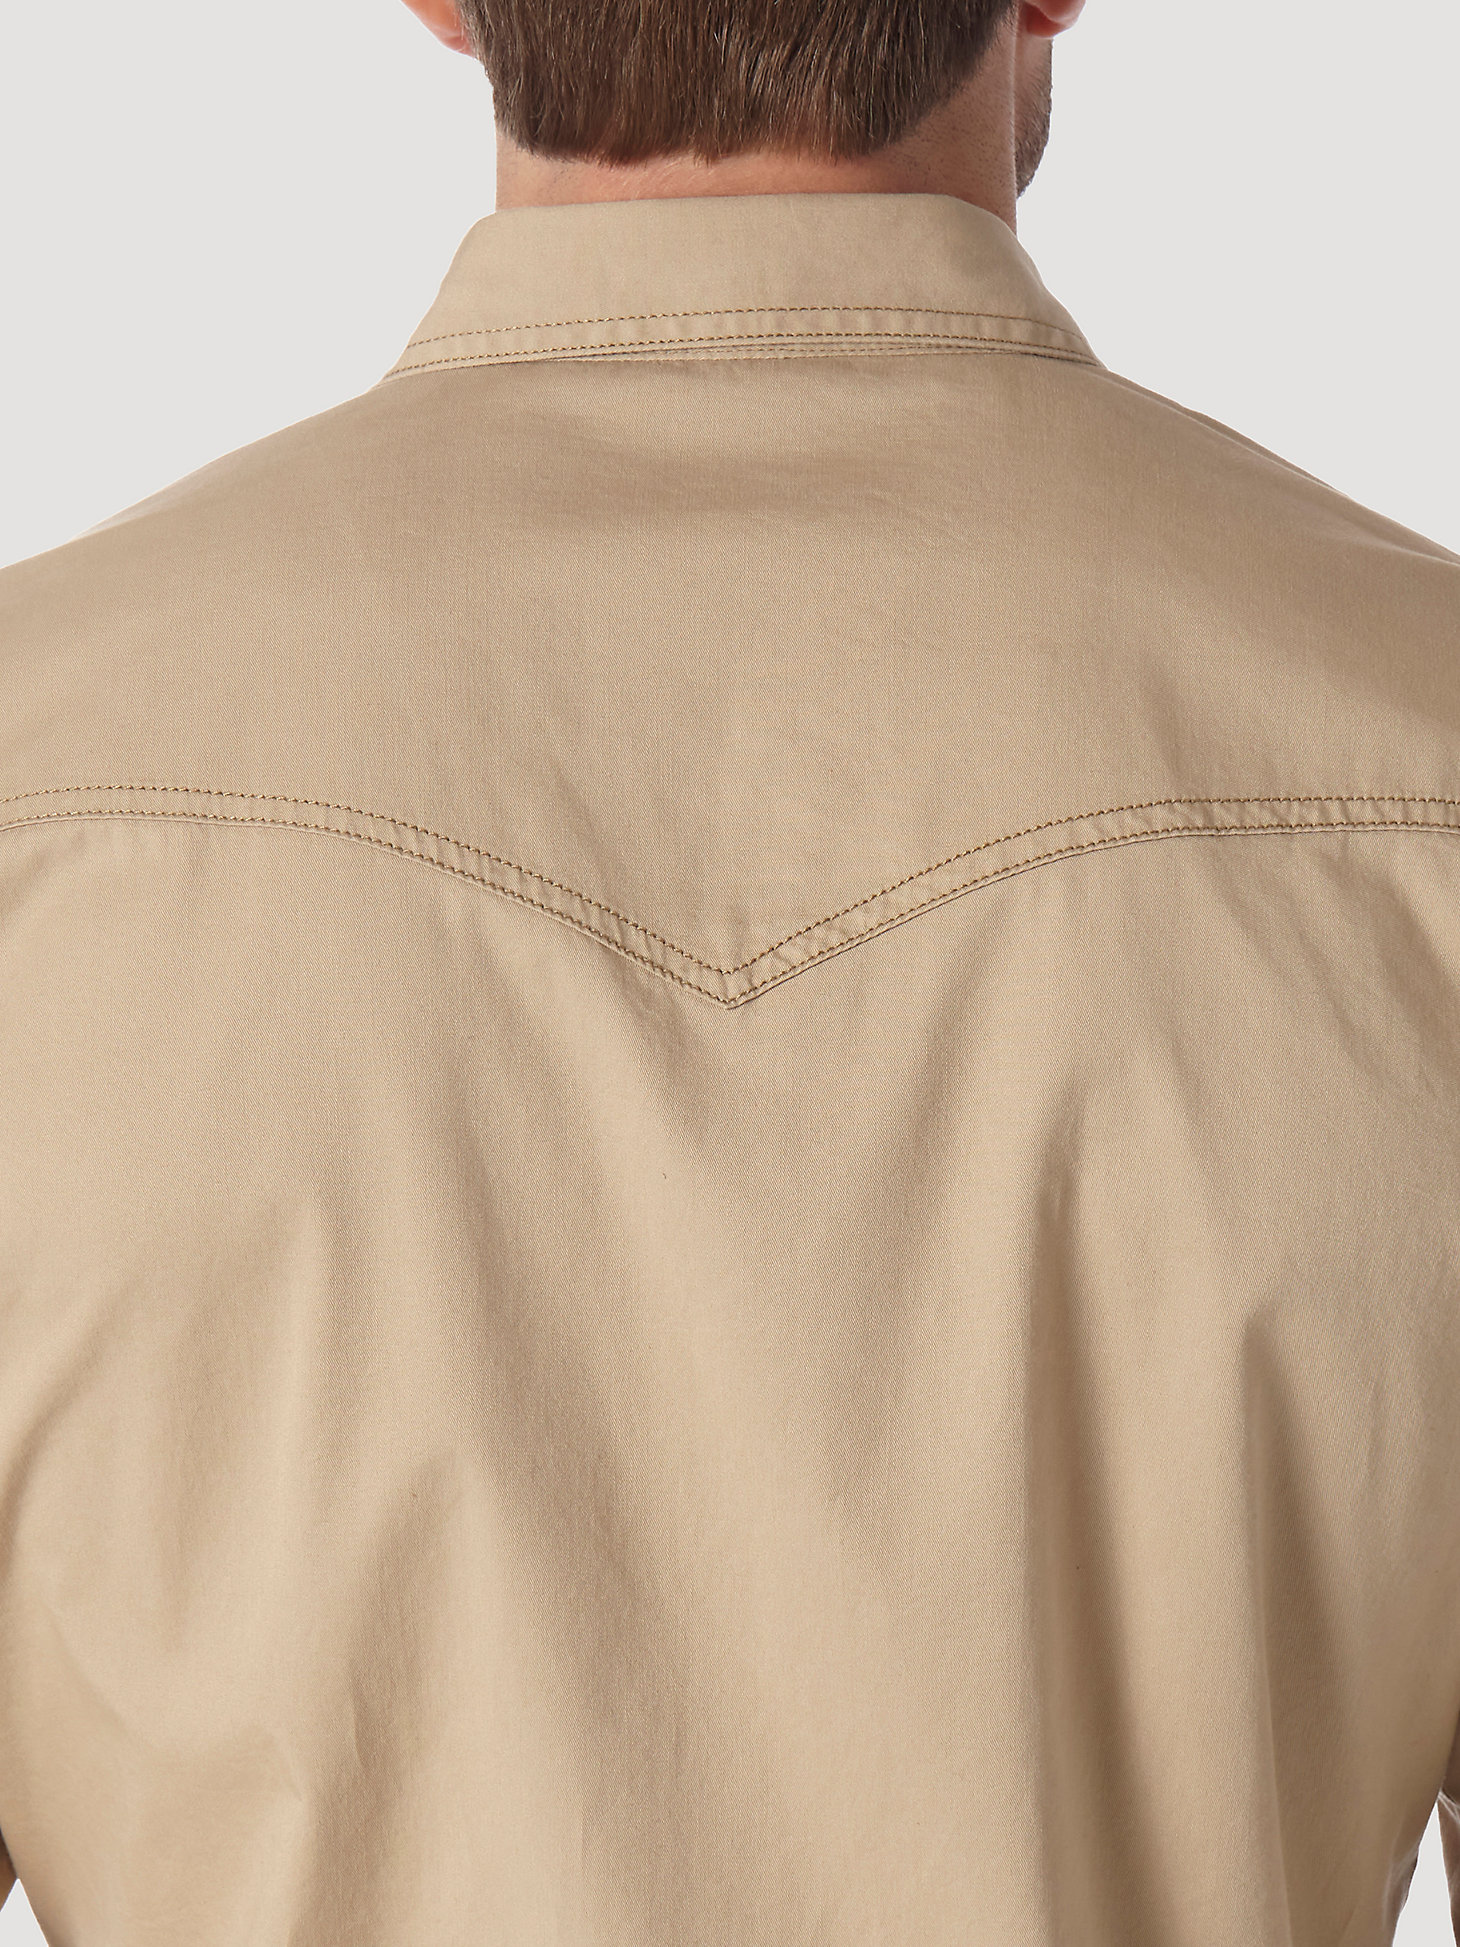 Men's Wrangler® Contrast Trim Western Two Snap Flap Pocket Shirt in Tan alternative view 6